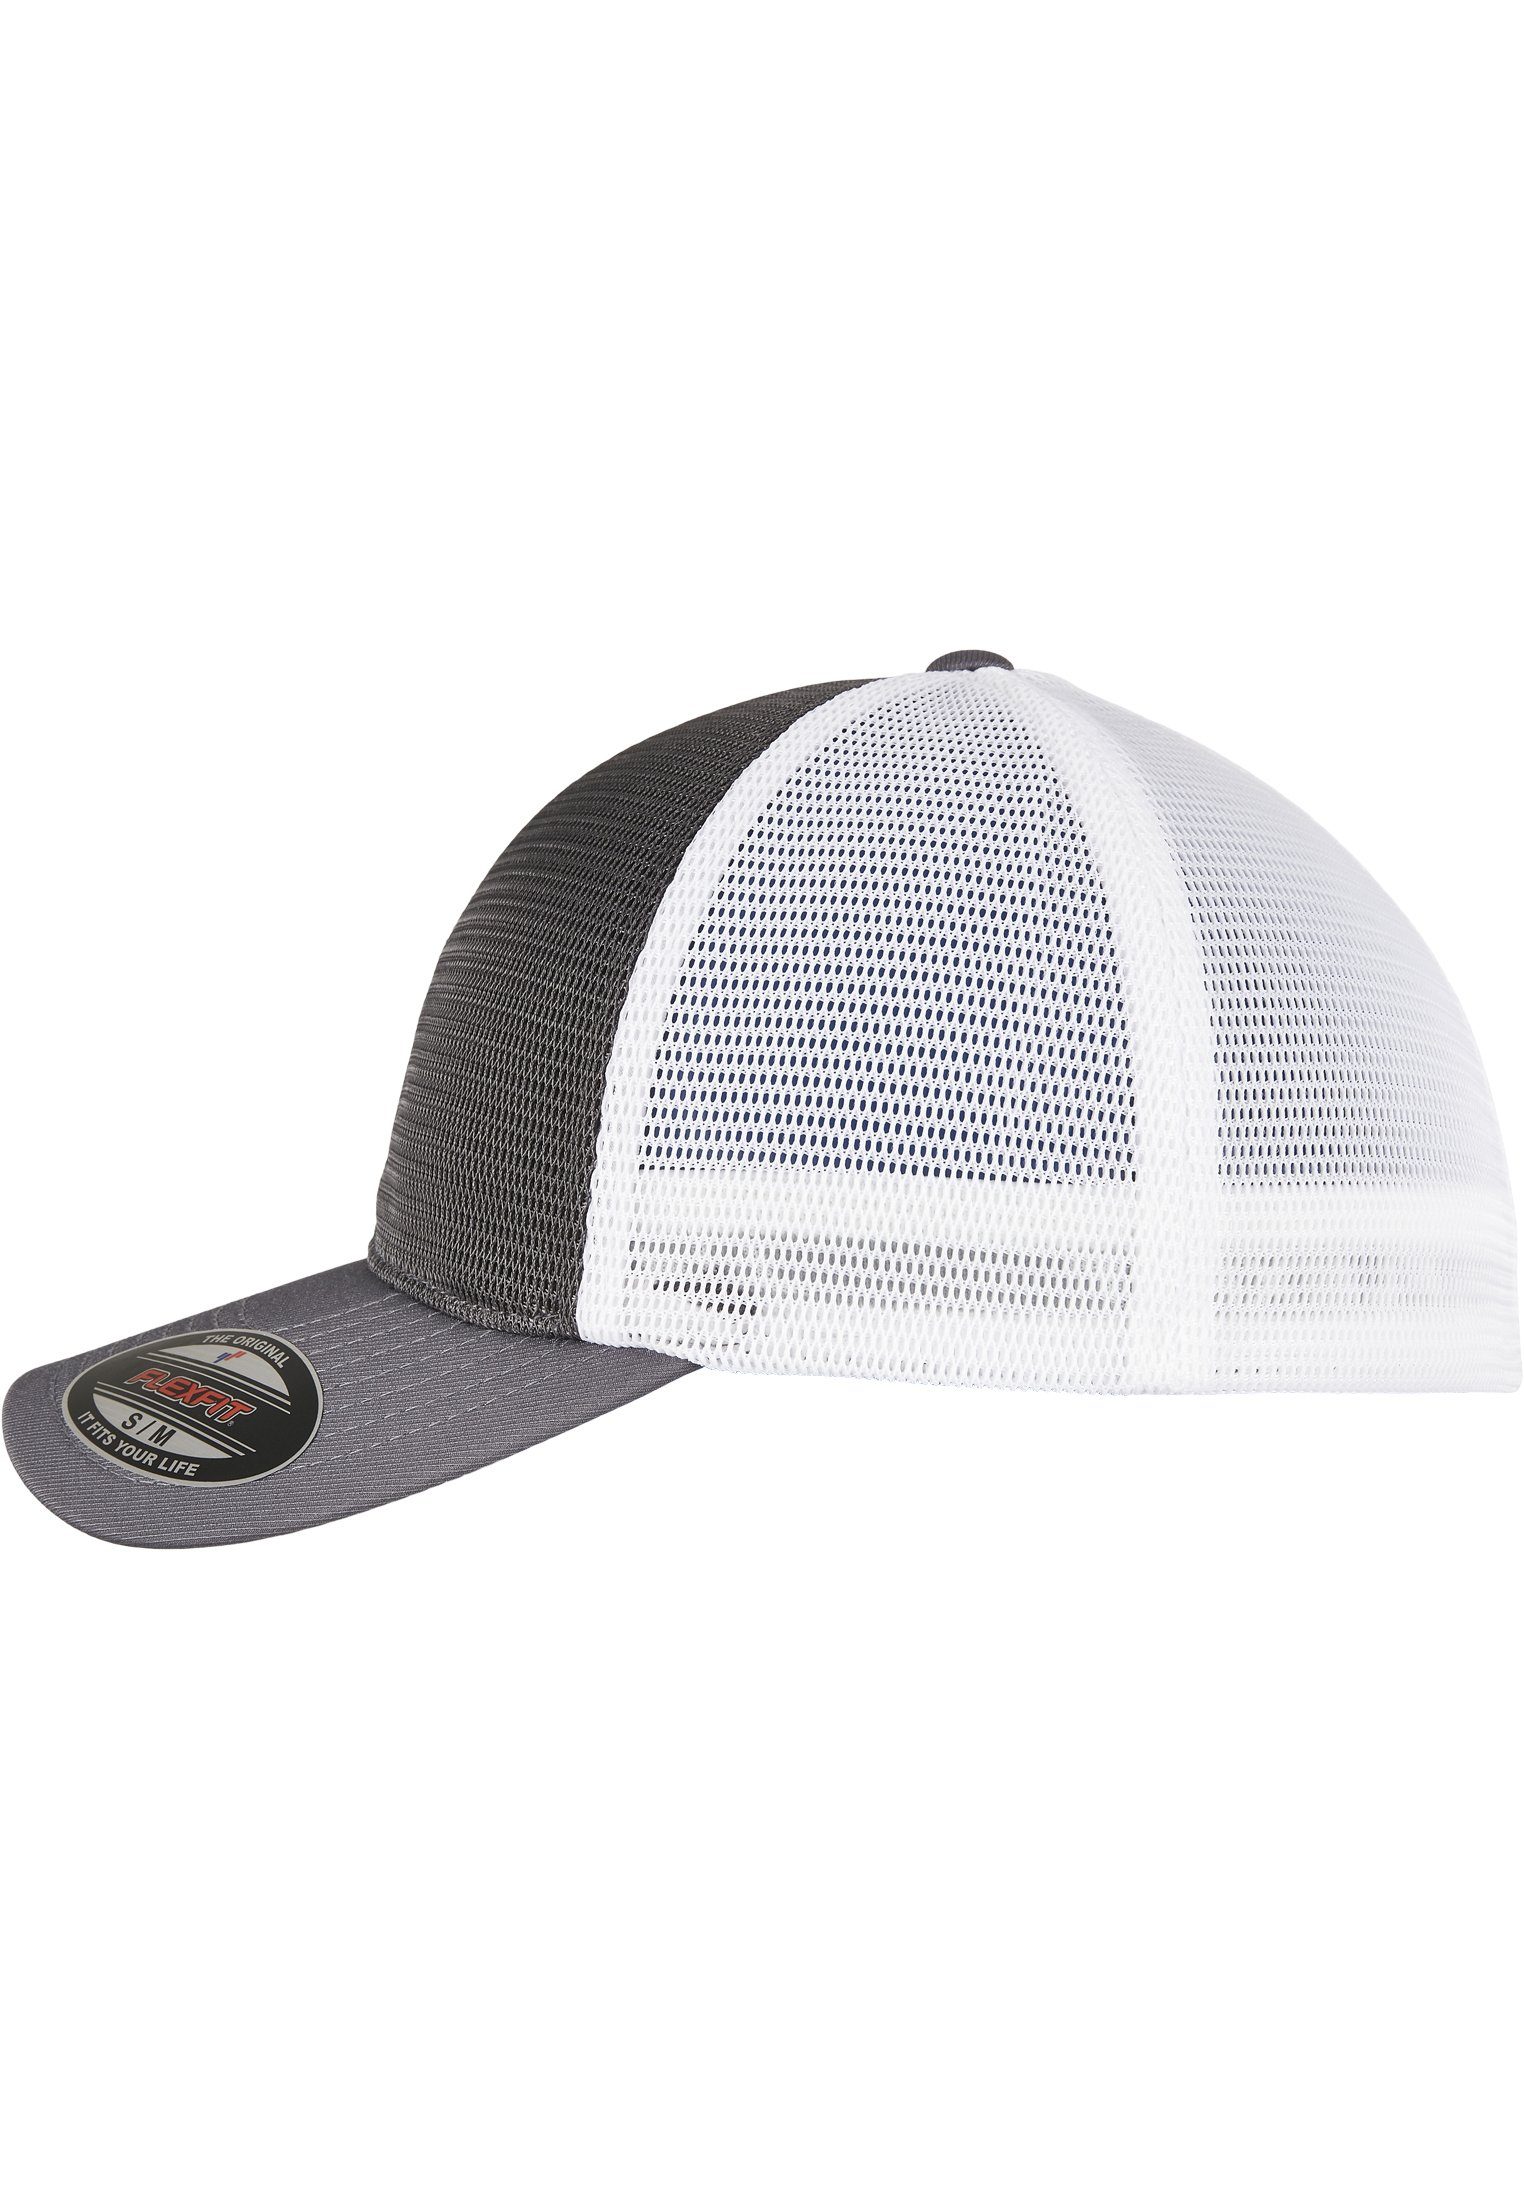 Flexfit Flex Cap Neue Kollektion 2-TONE 360 CAP OMNIMESH charcoal/white FLEXFIT